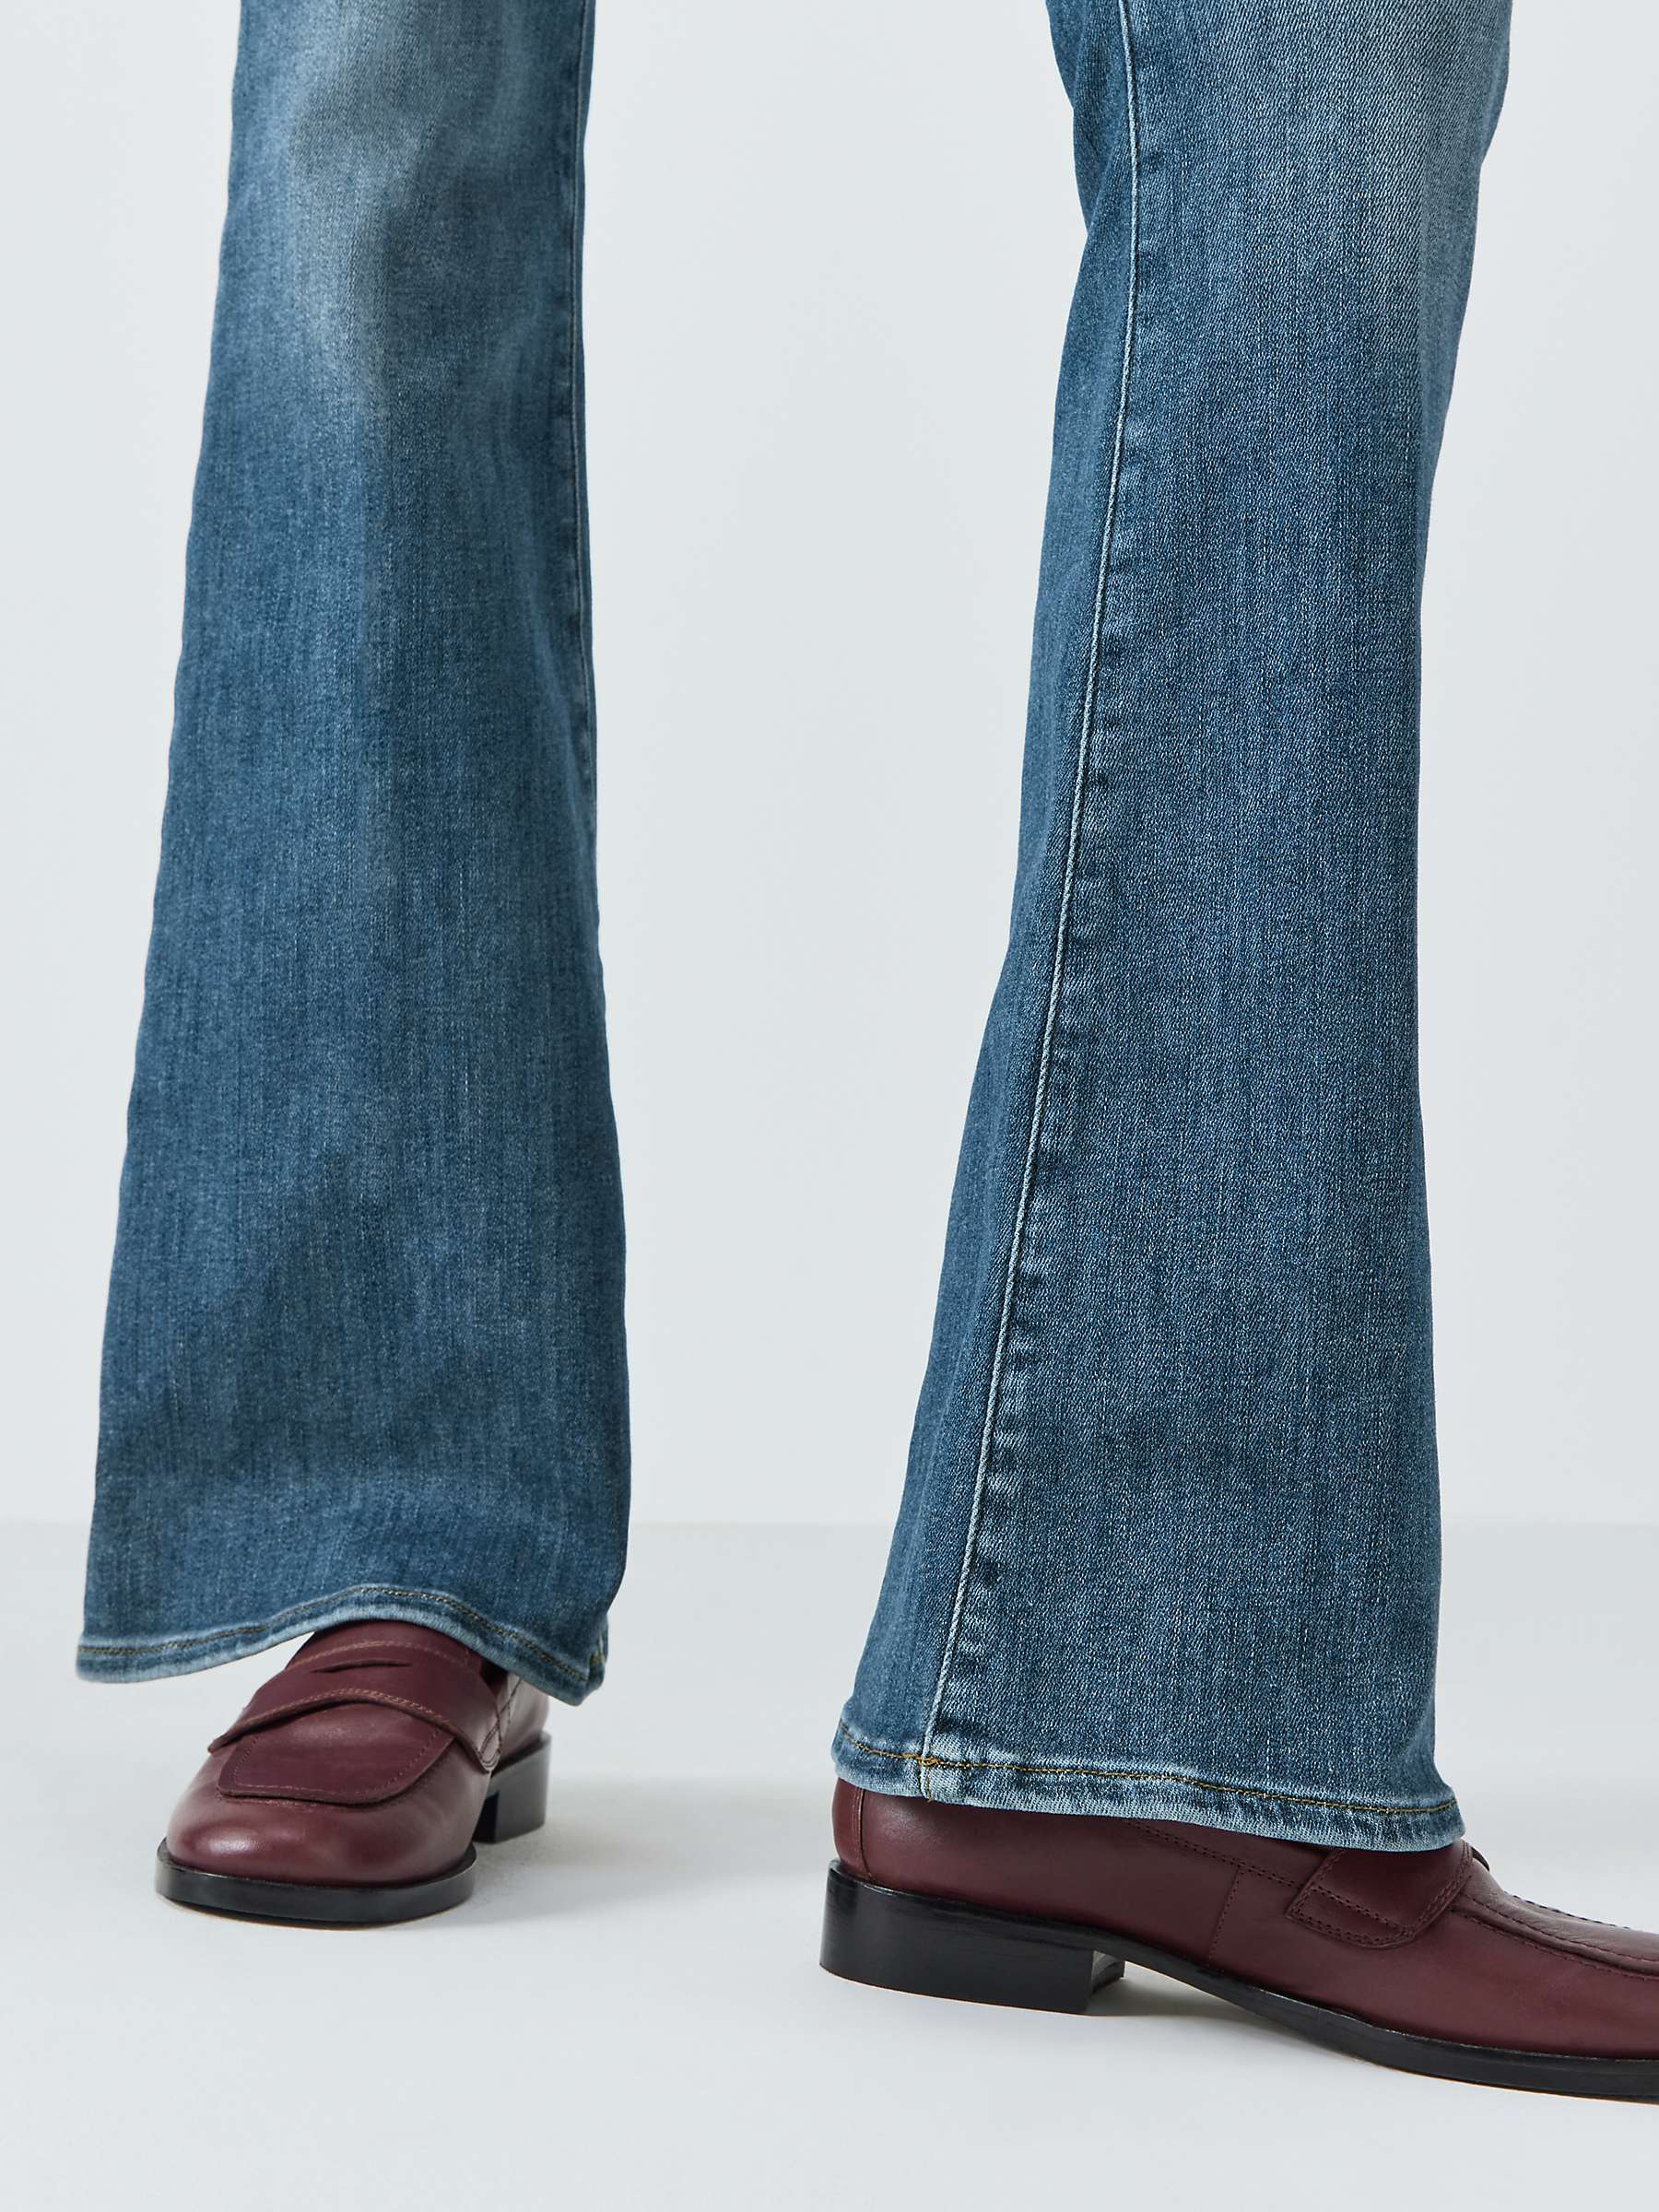 Buy FRAME Le High Waist Flared Jeans, Bestia Online at johnlewis.com